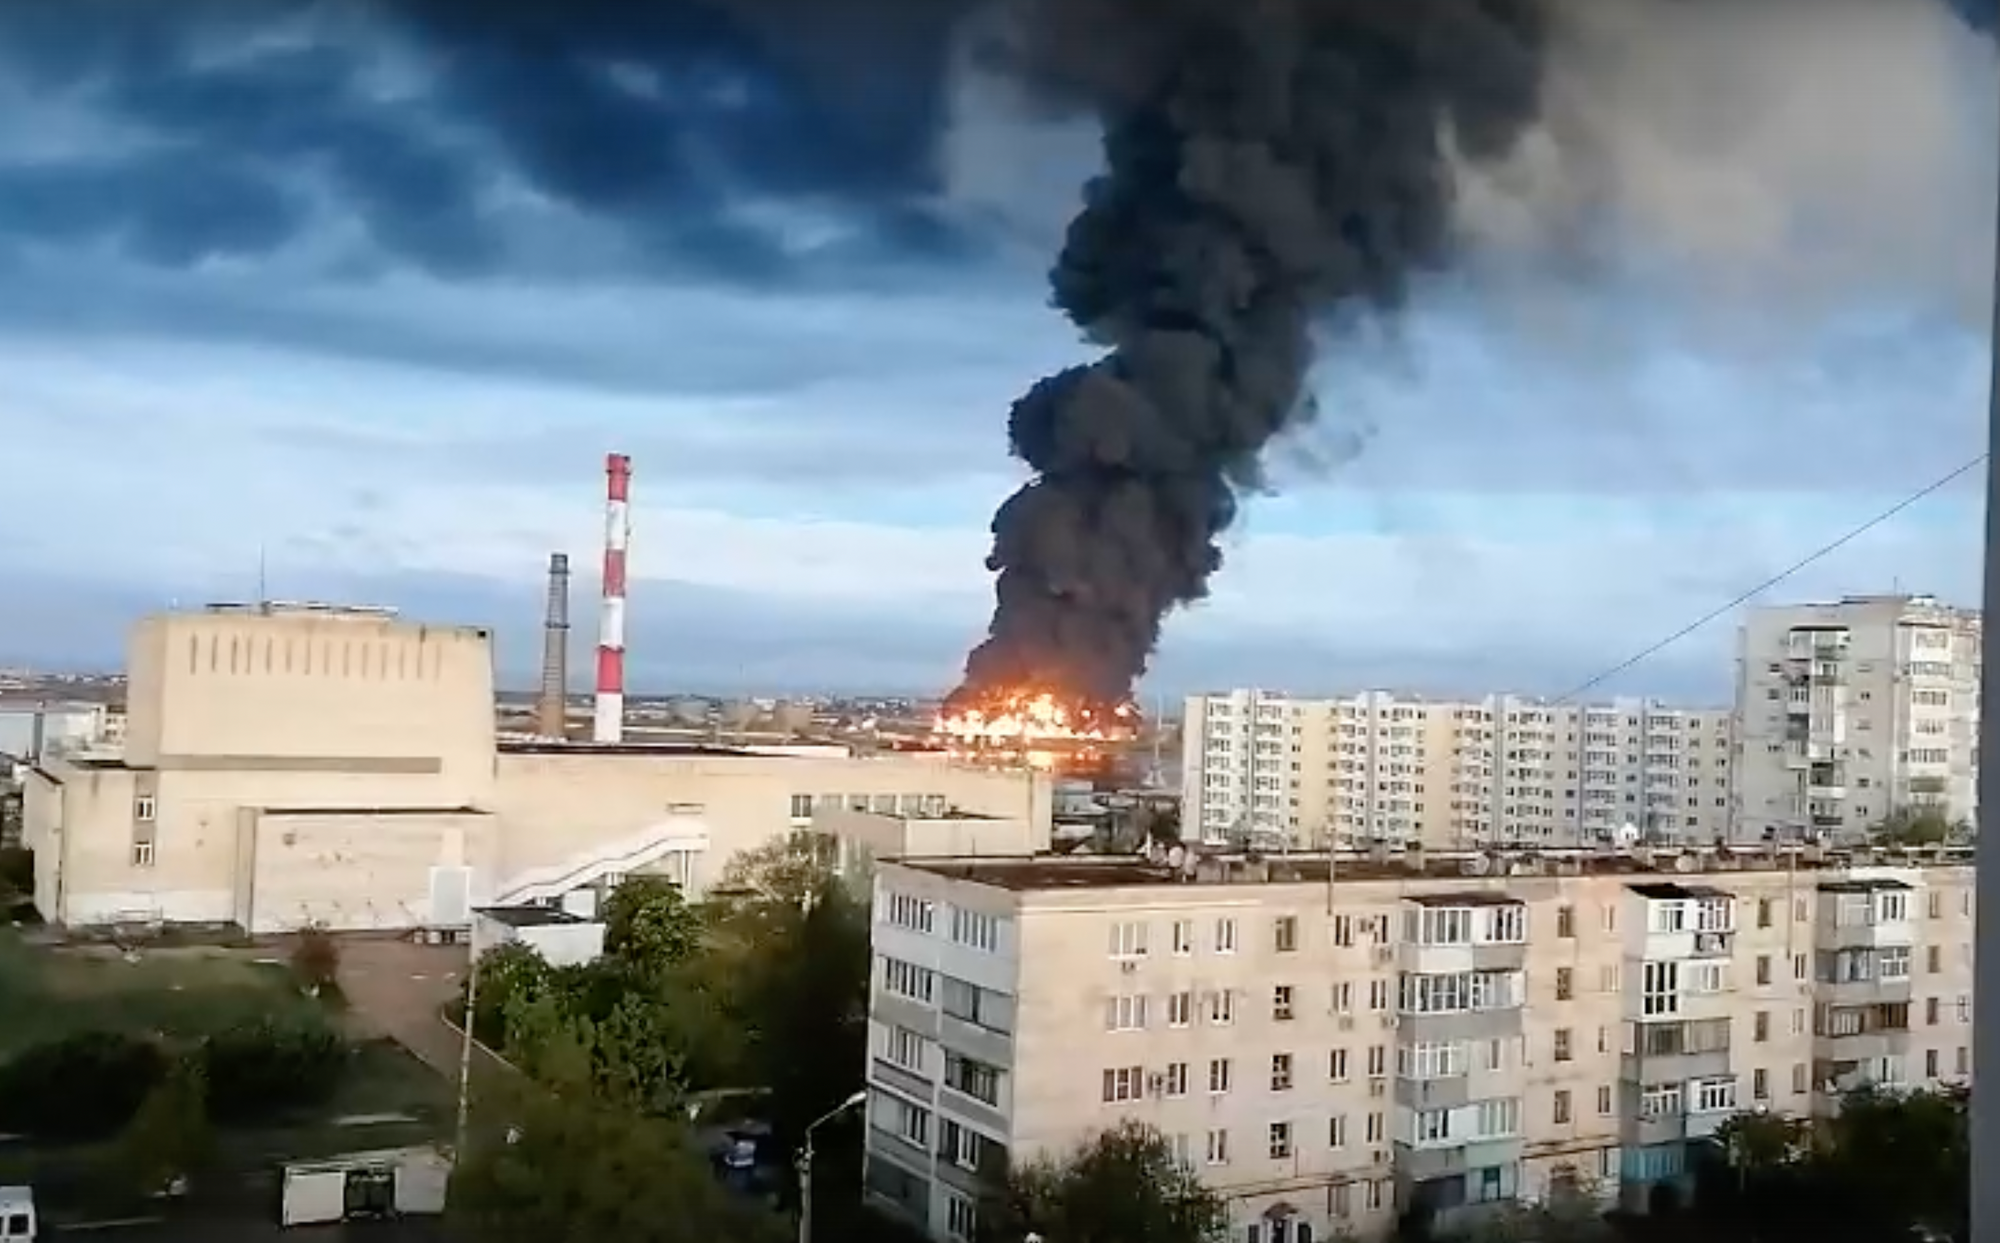 Ukraine war latest: Oil depot fire in Sevastopol 'preparation' for counteroffensive, says military spokesperson